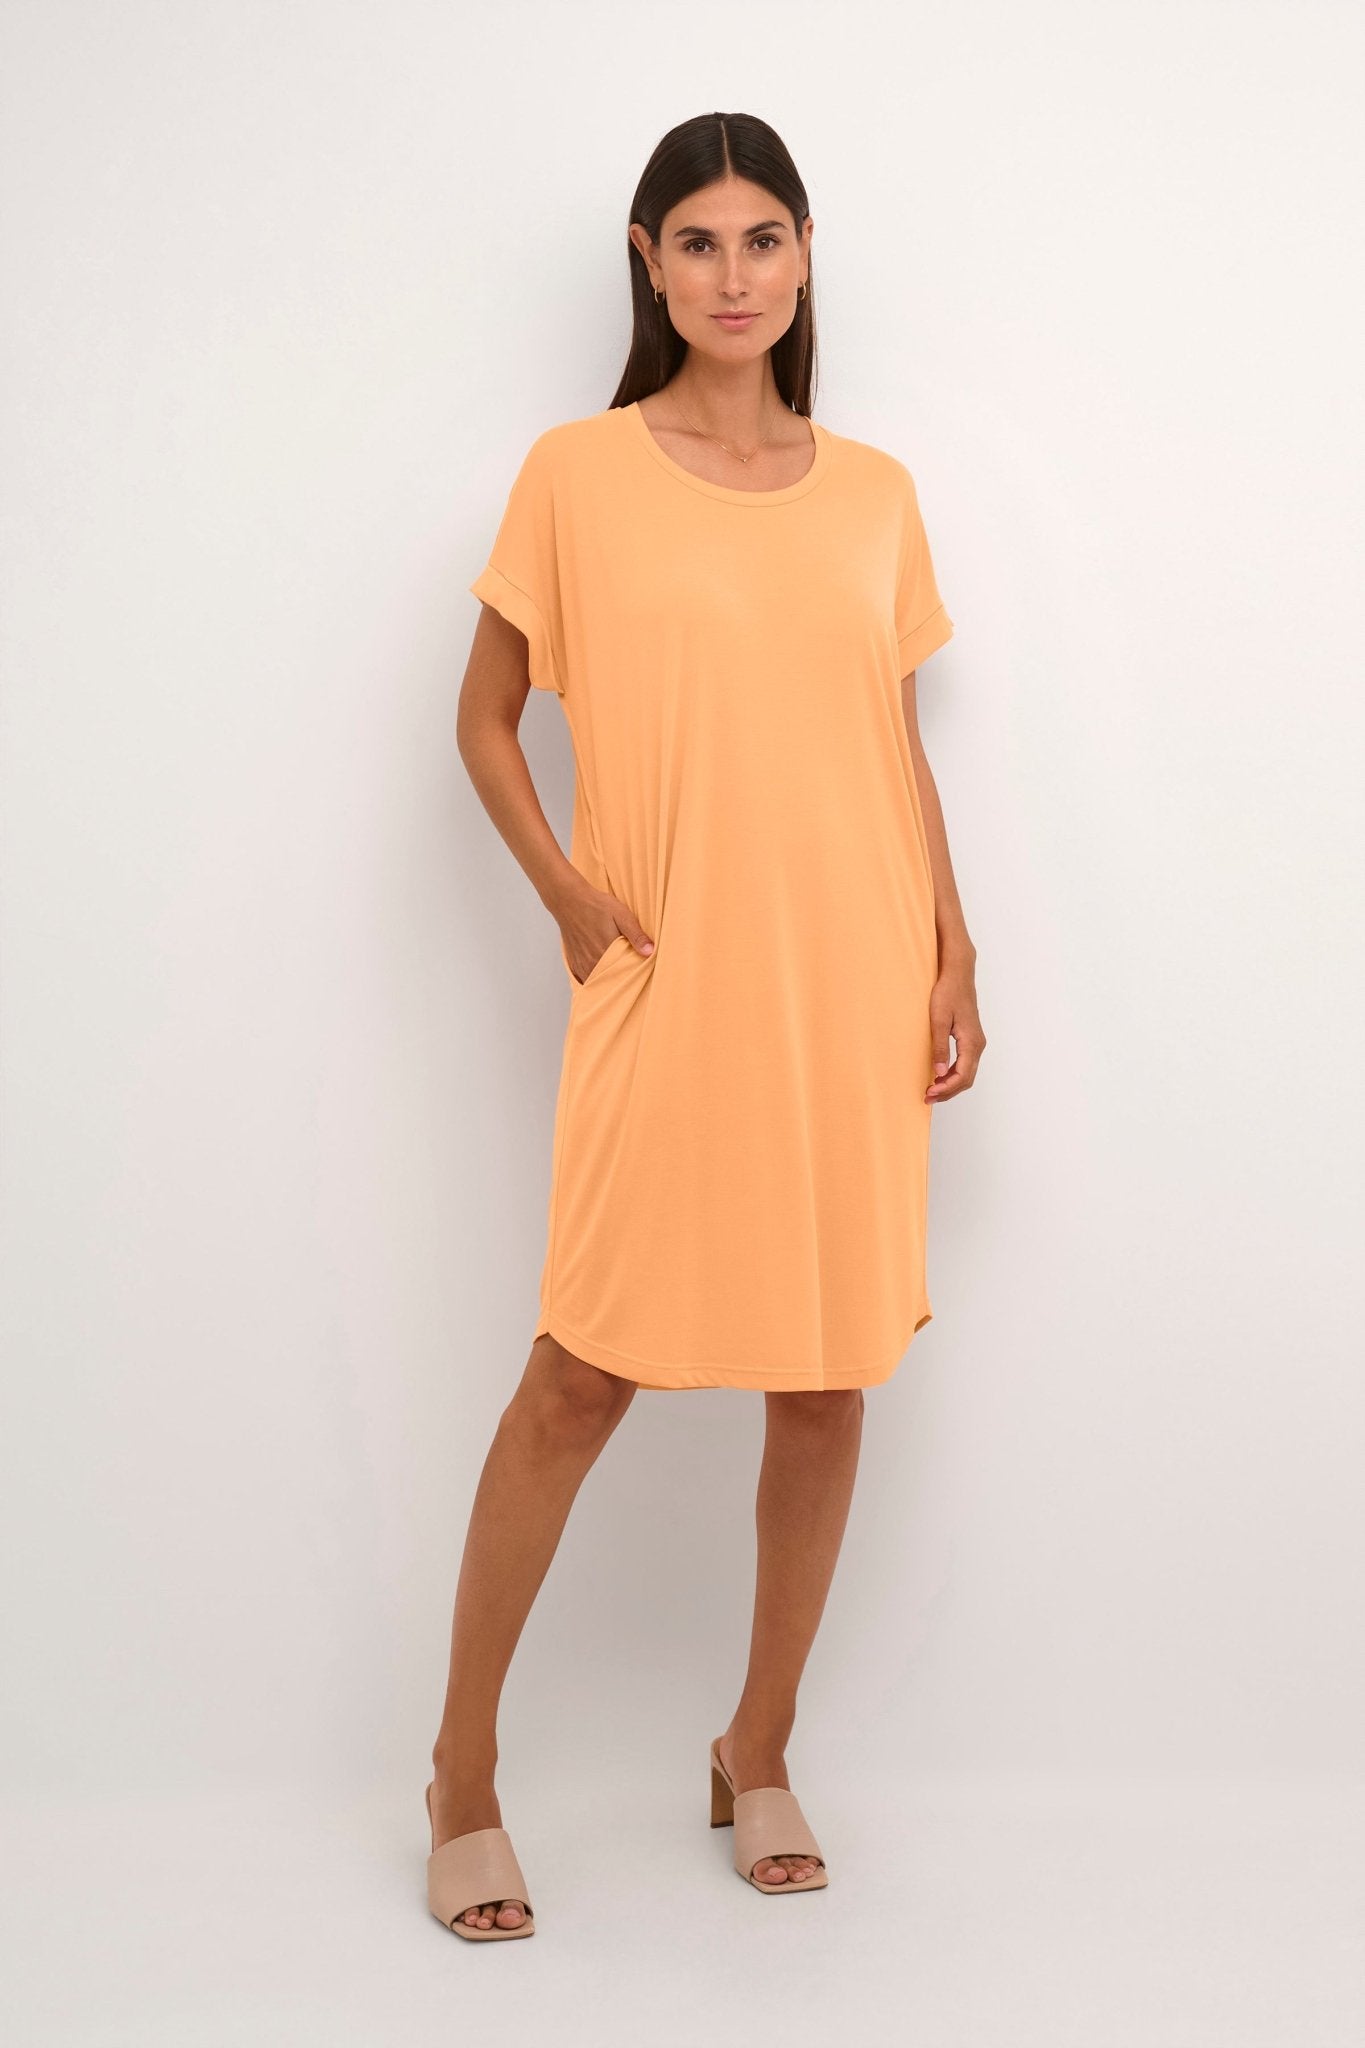 Kajsa Jersey knit T-shirt dress by Culture - tangerine - Blue Sky Fashions & Lingerie